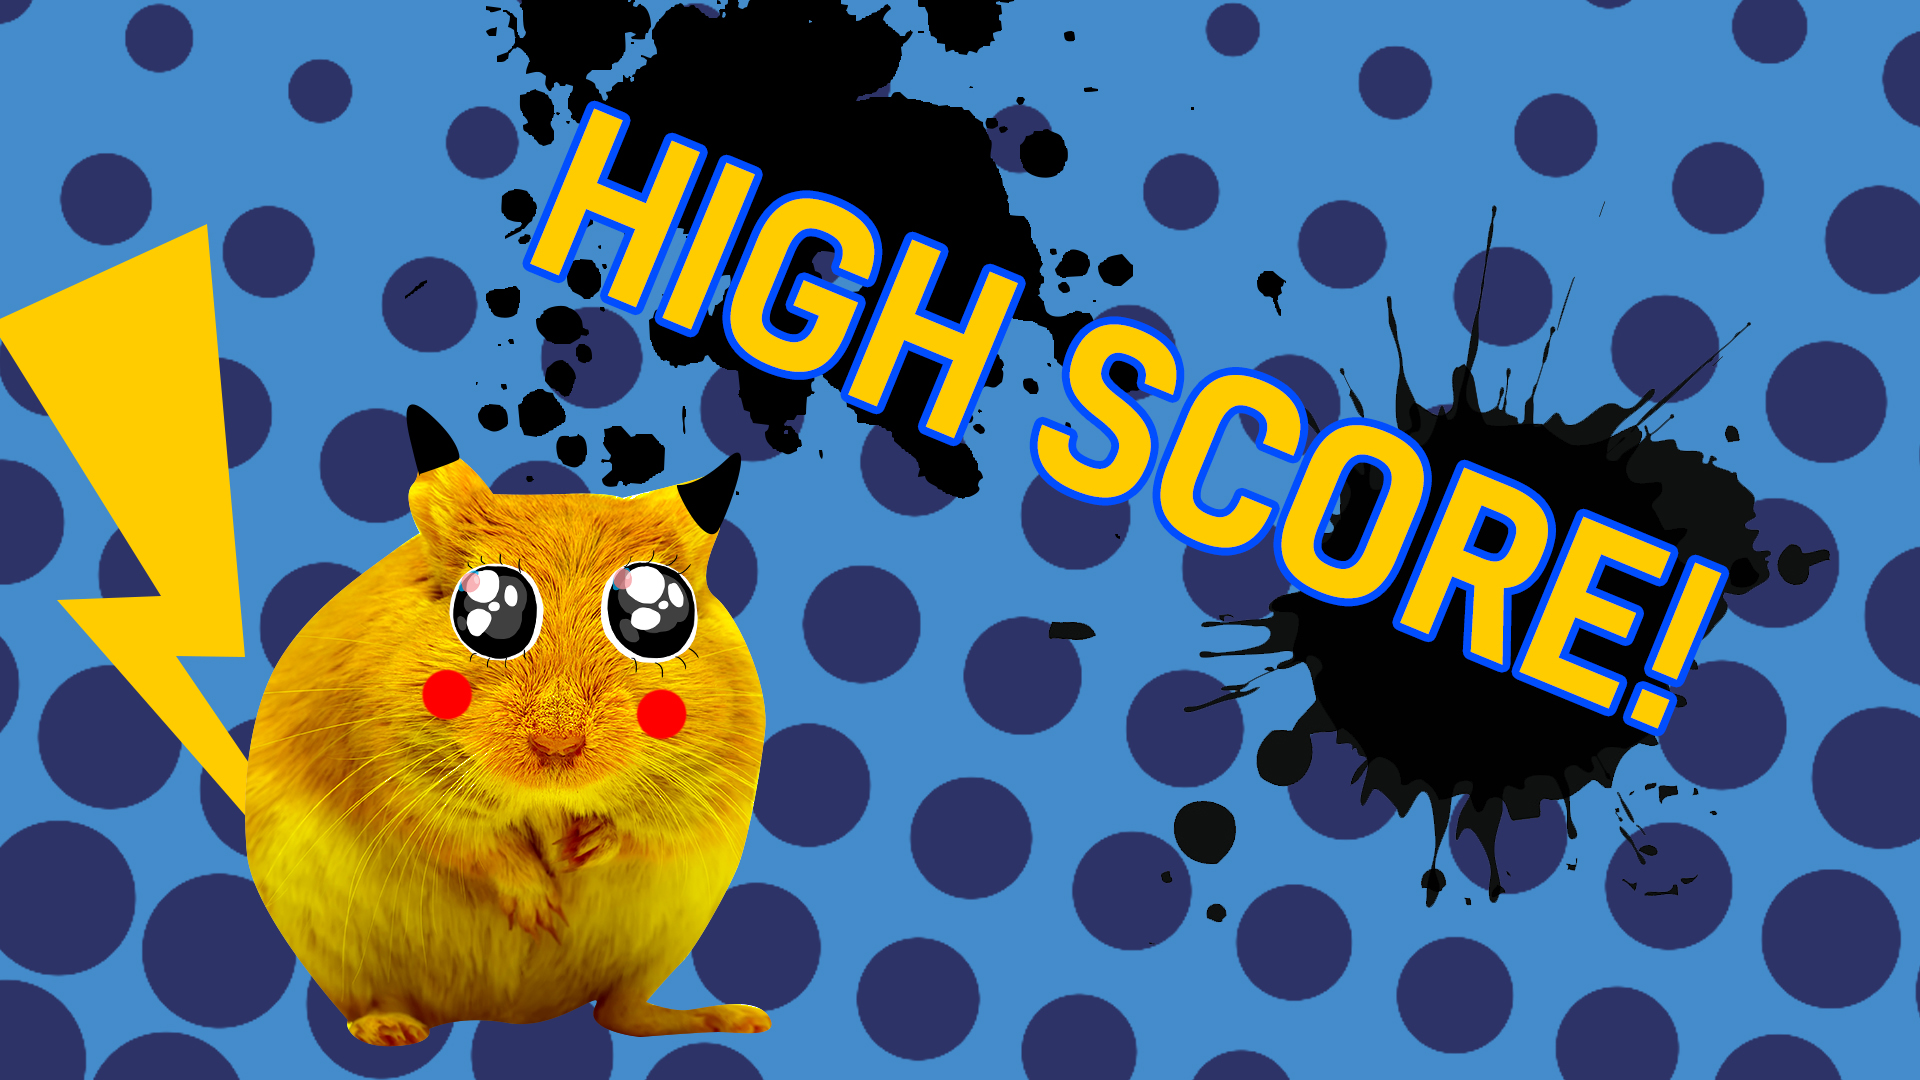 Result: High score